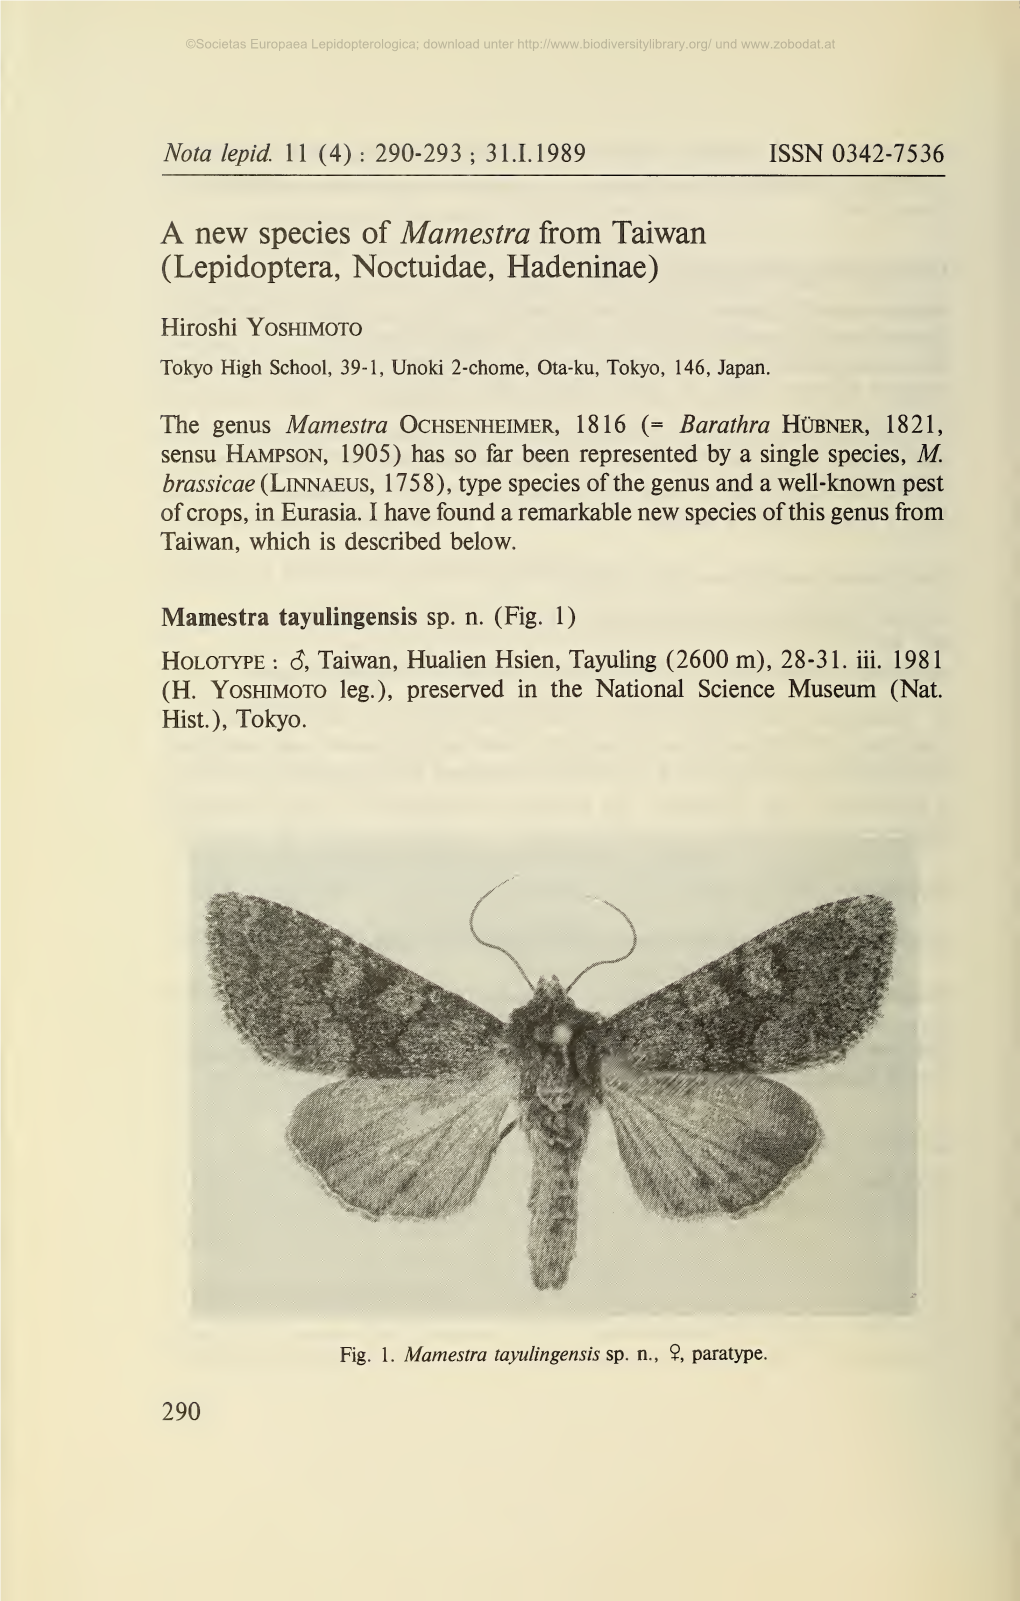 Nota Lepidopterologica